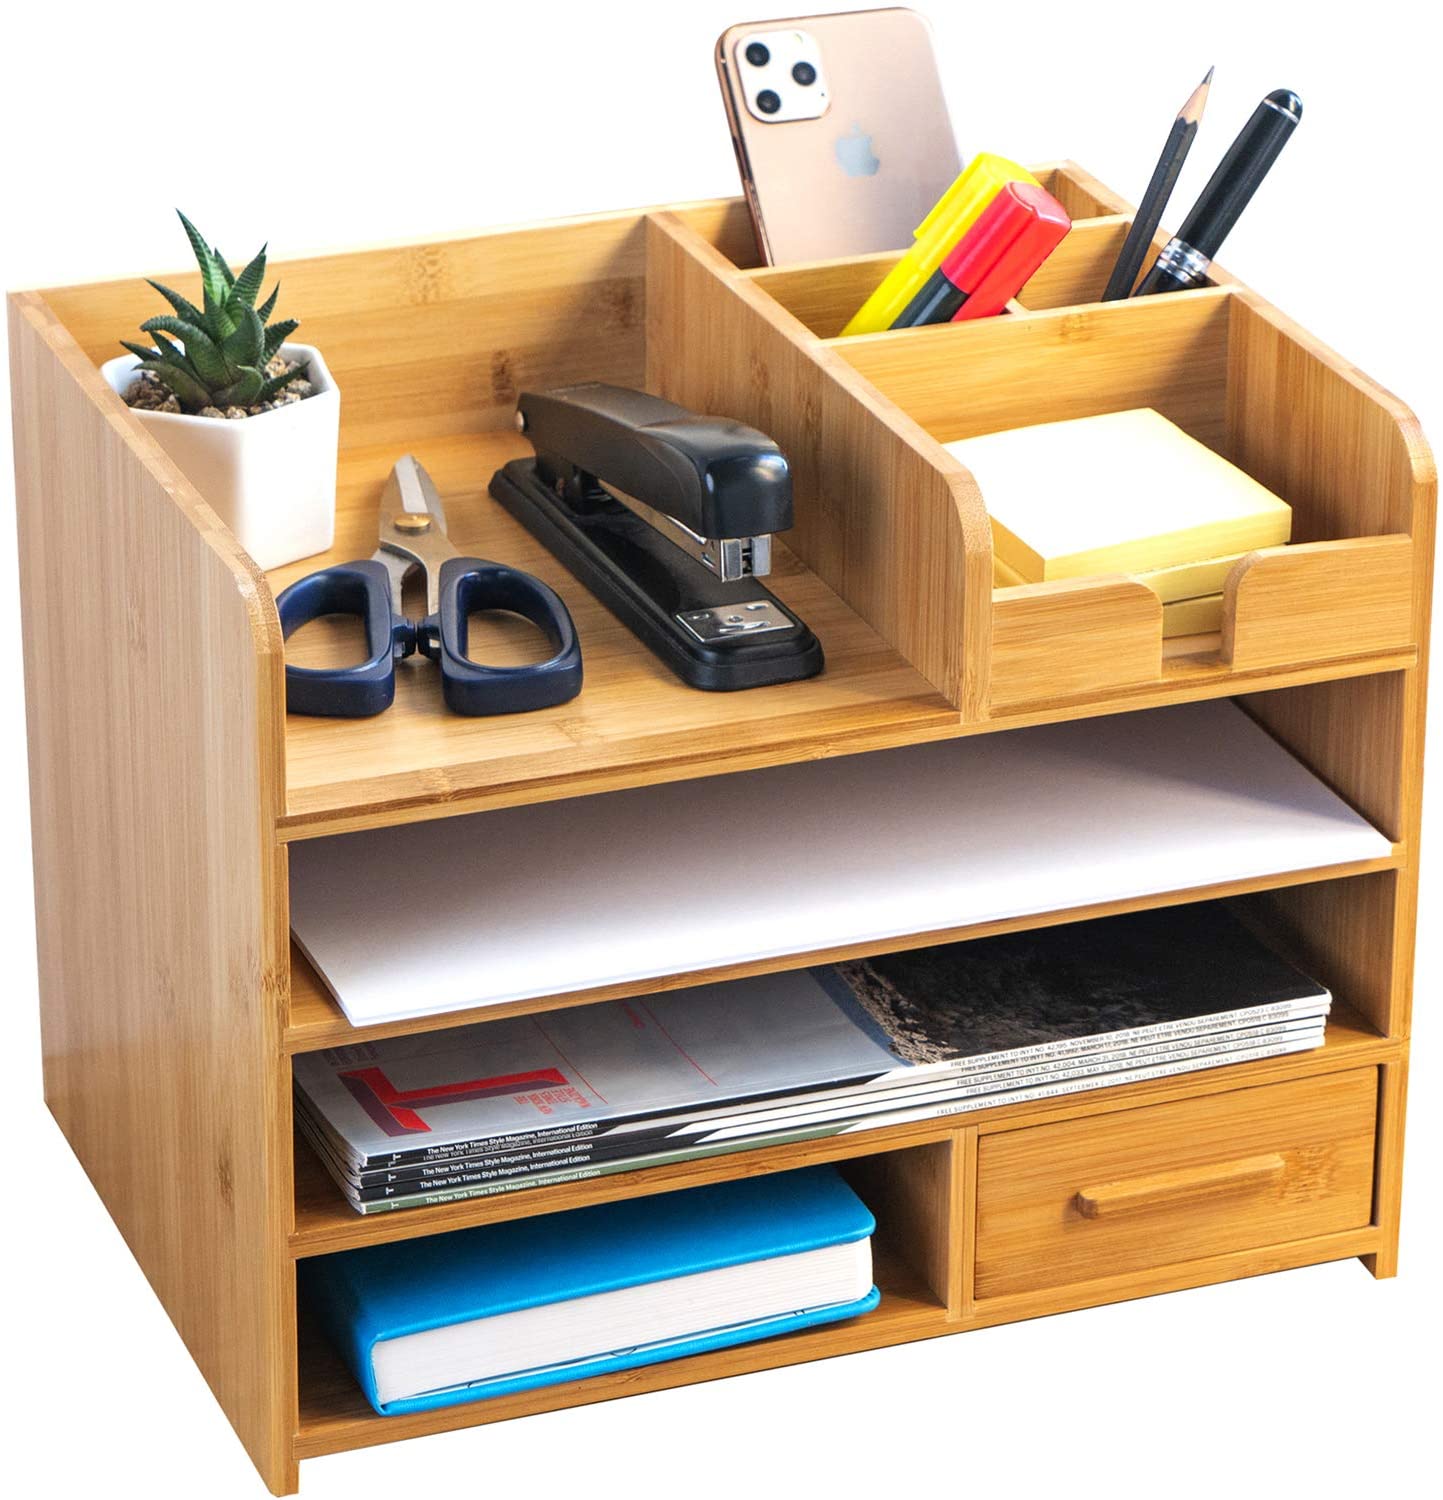 Beiz Desk Organizers and Accessories Storage with Drawer, Paper